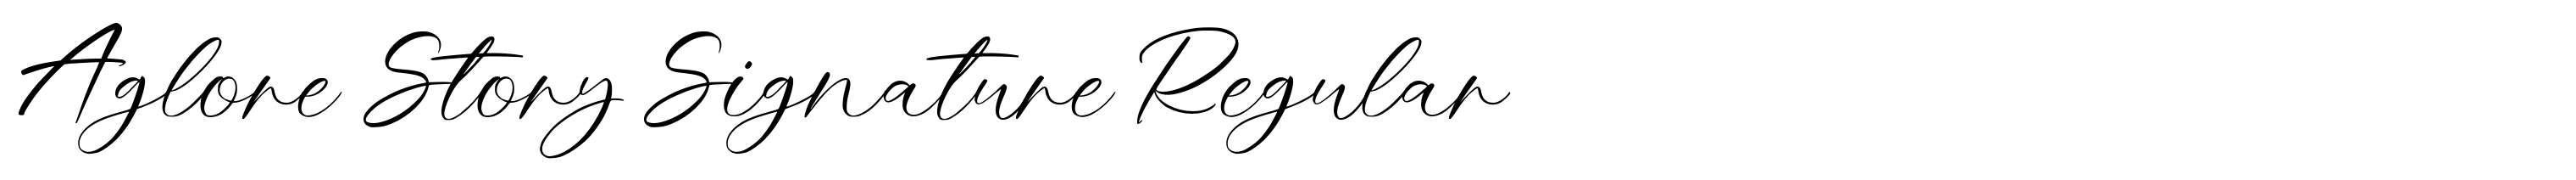 Aglore Story Signature Regular